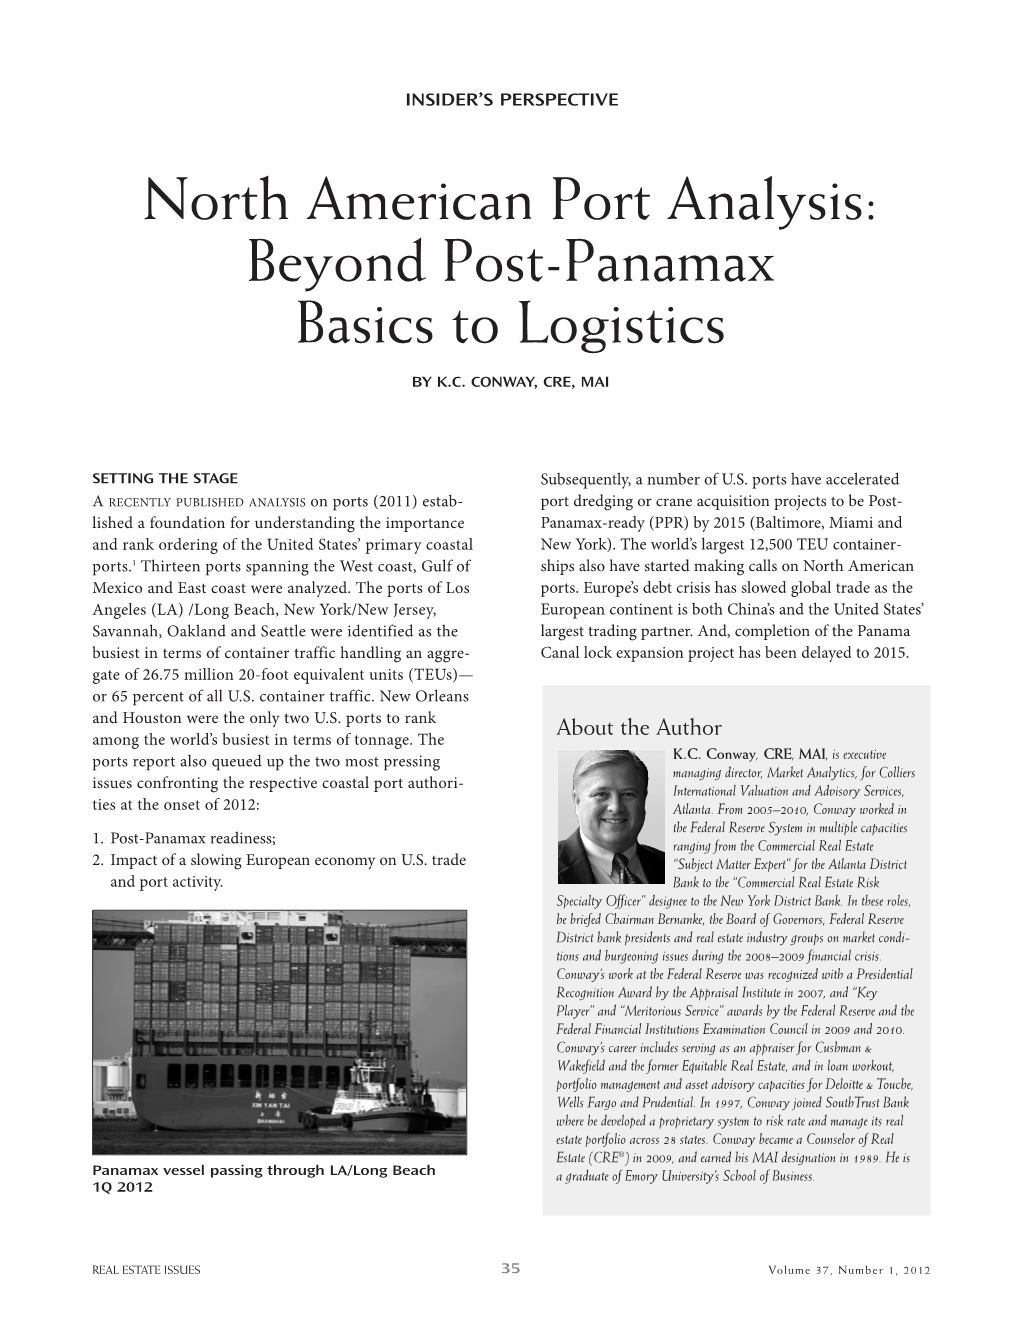 North American Port Analysis: Beyond Post-Panamax Basics to Logistics